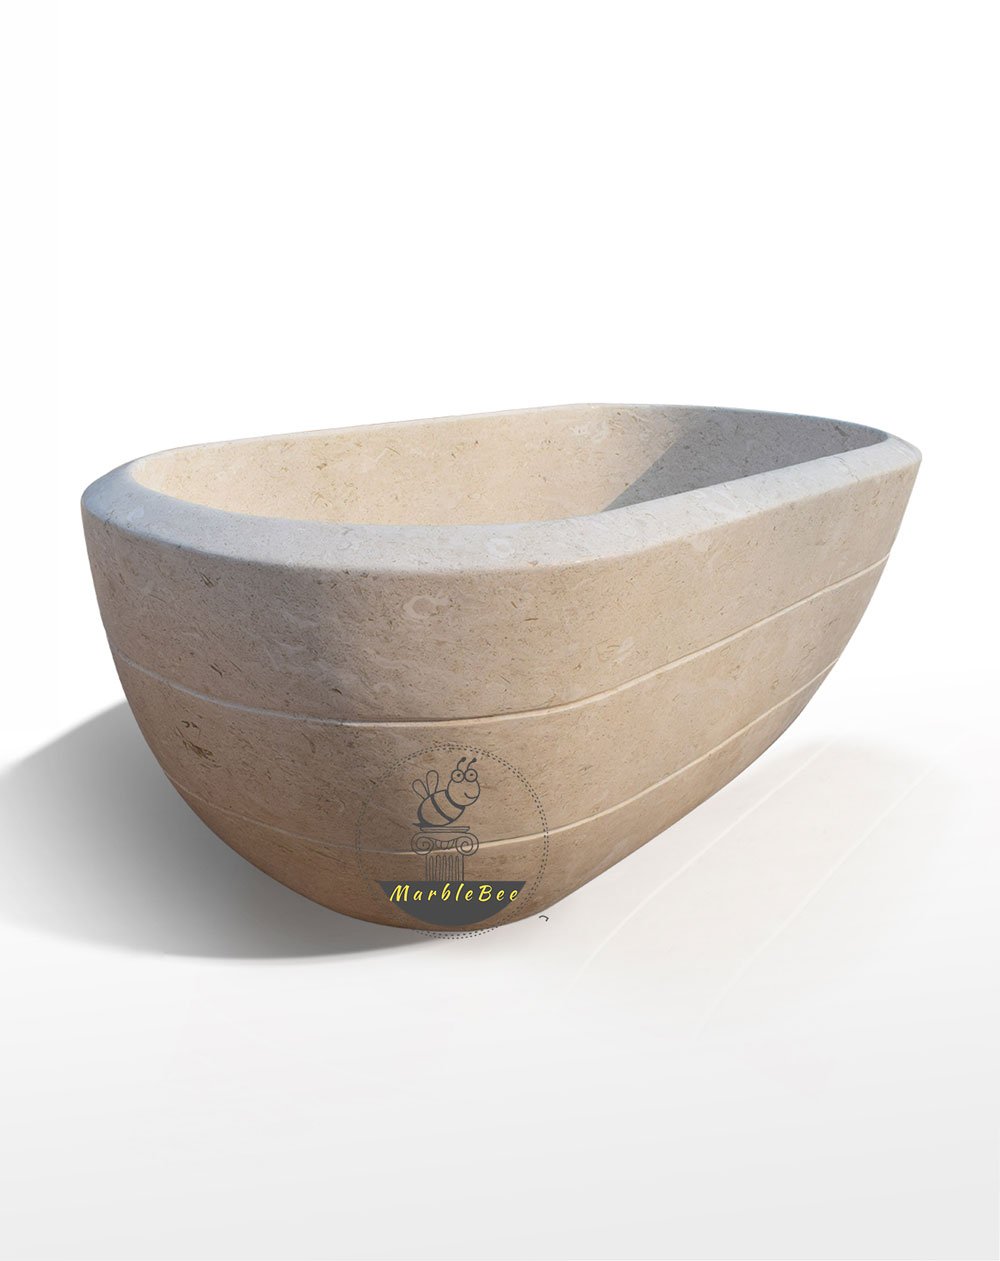 Travertine stone tub world's top designer's choice